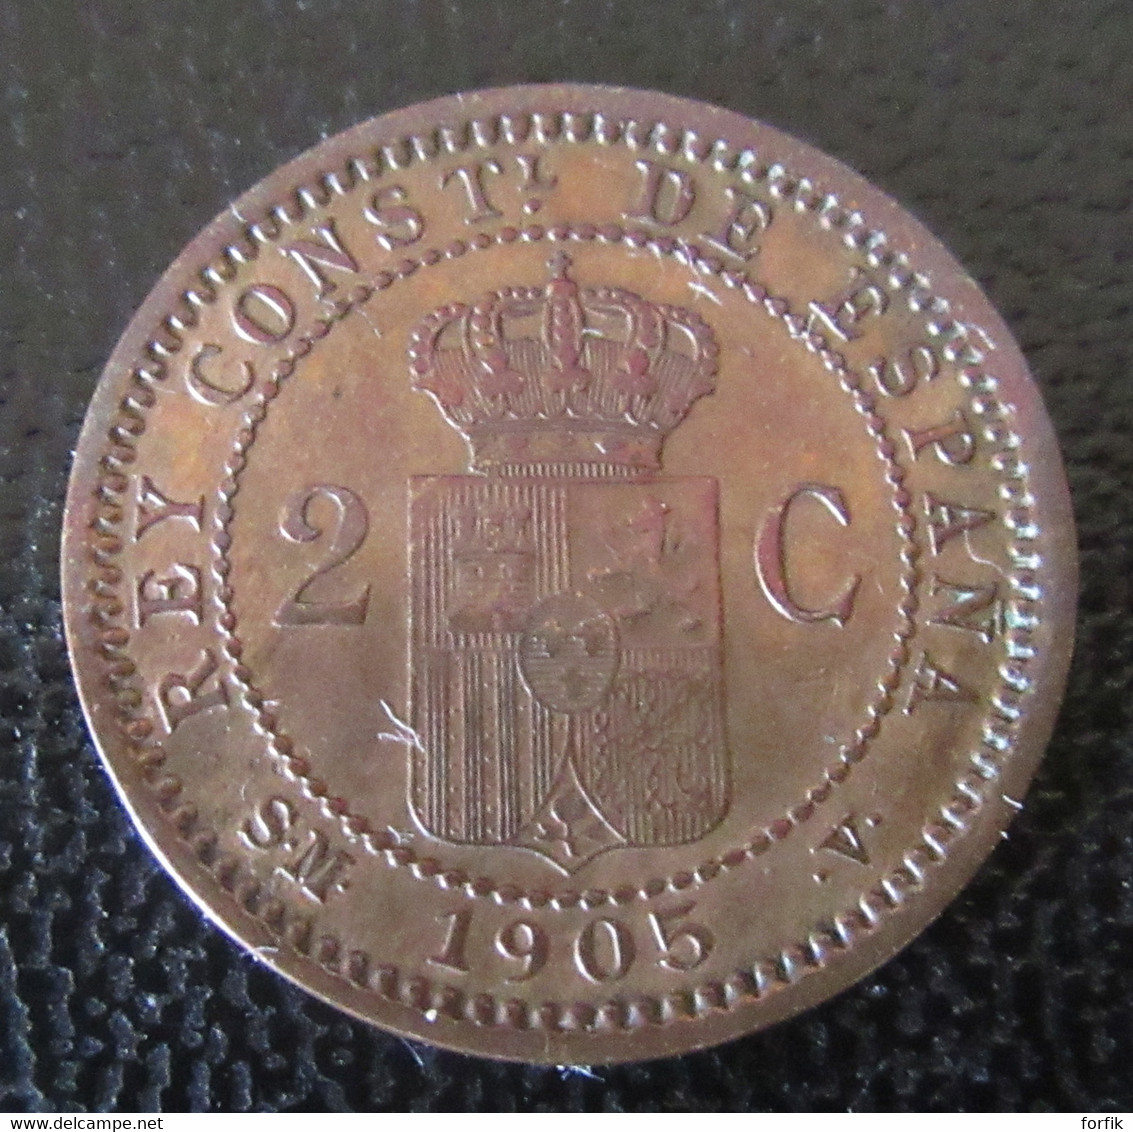 Espagne / Espana - Monnaie 2 Centimos 1905 - SPL / FDC - Erstausgaben